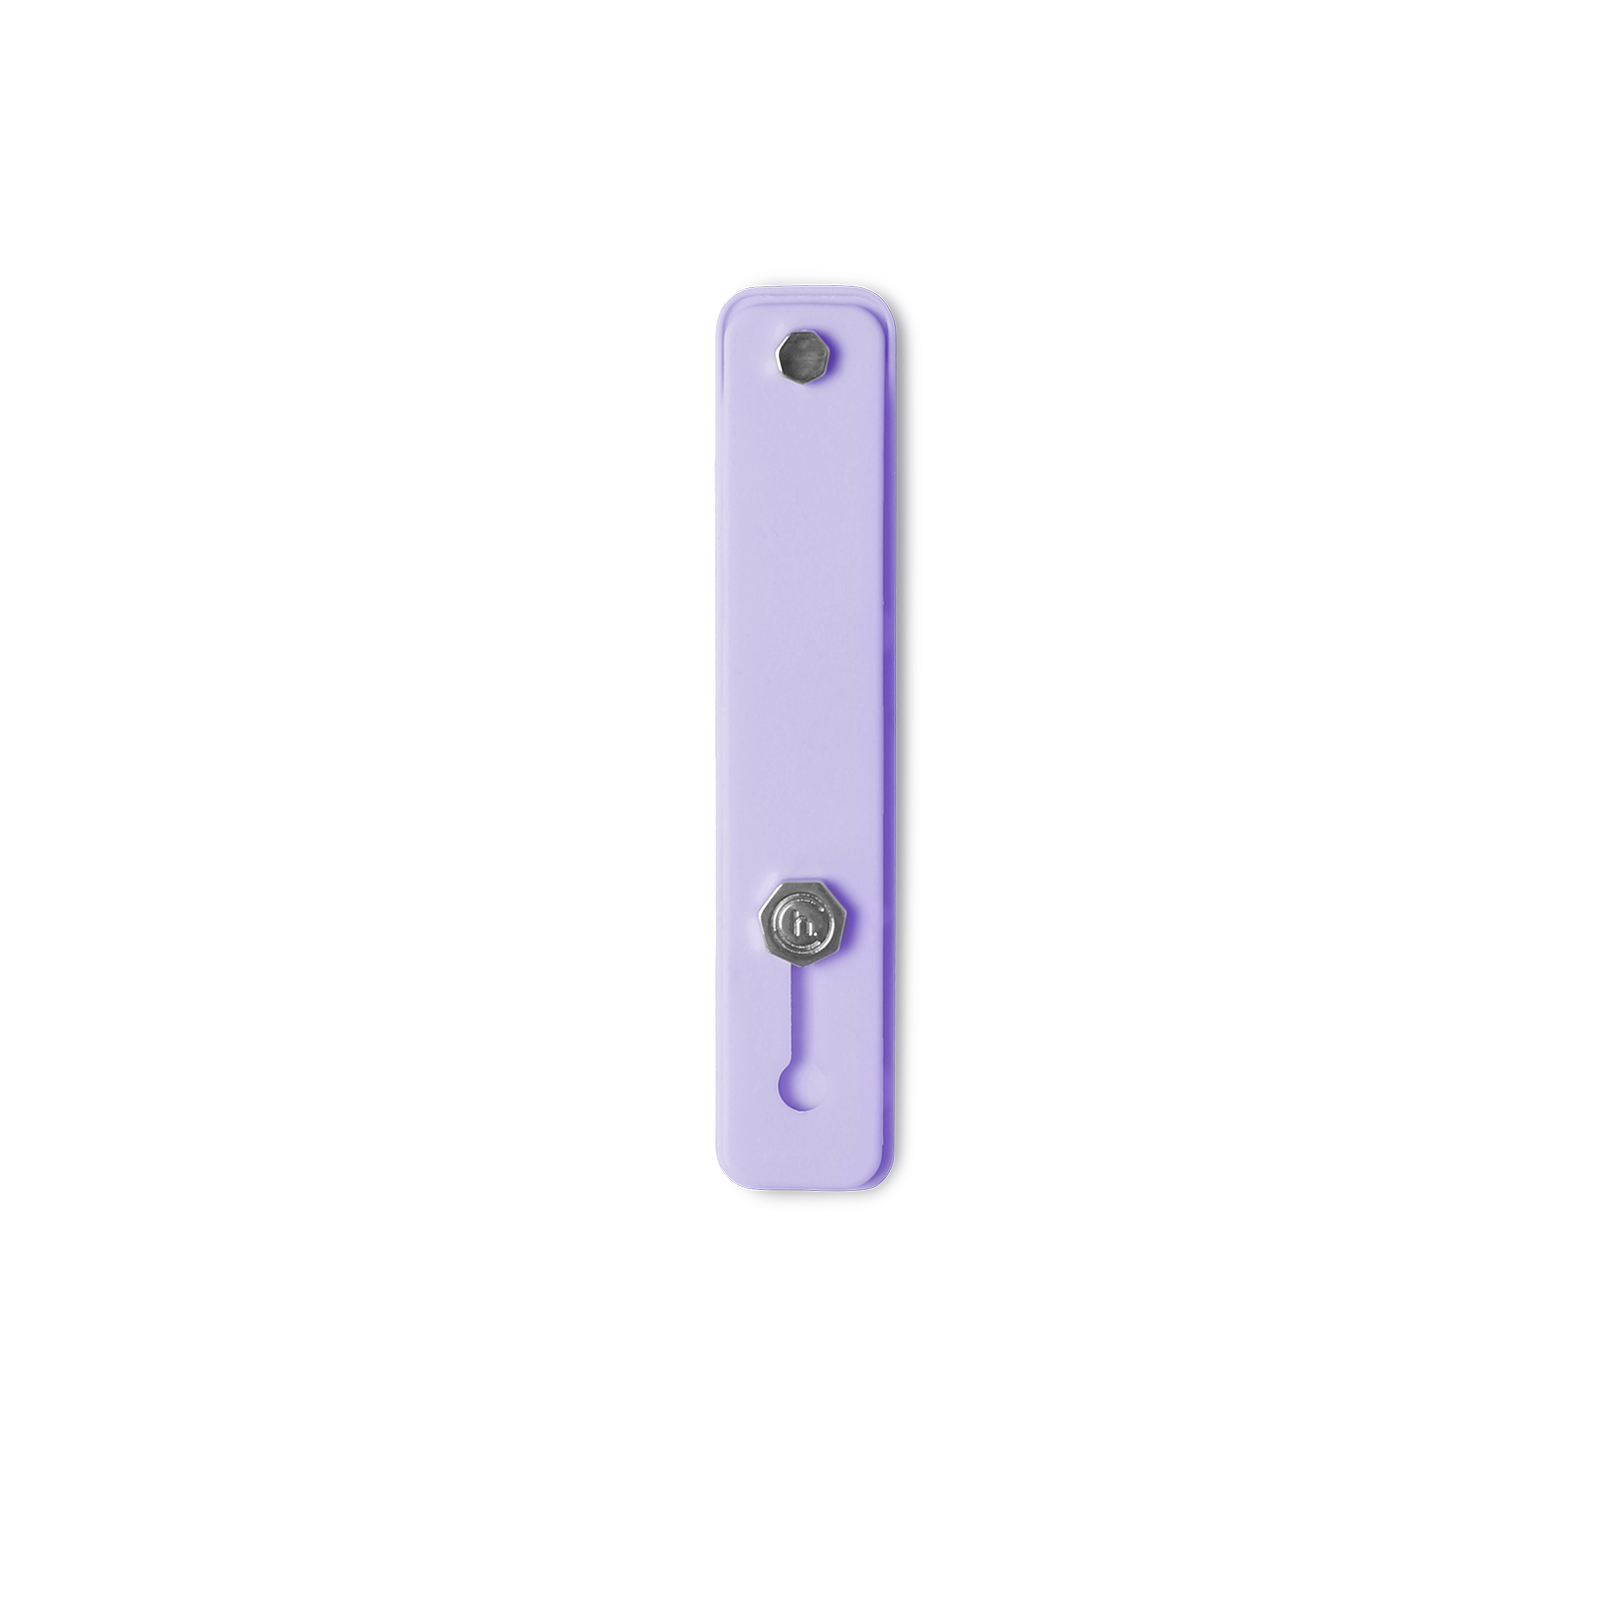 Finger strap, attachable phone grip, lavender